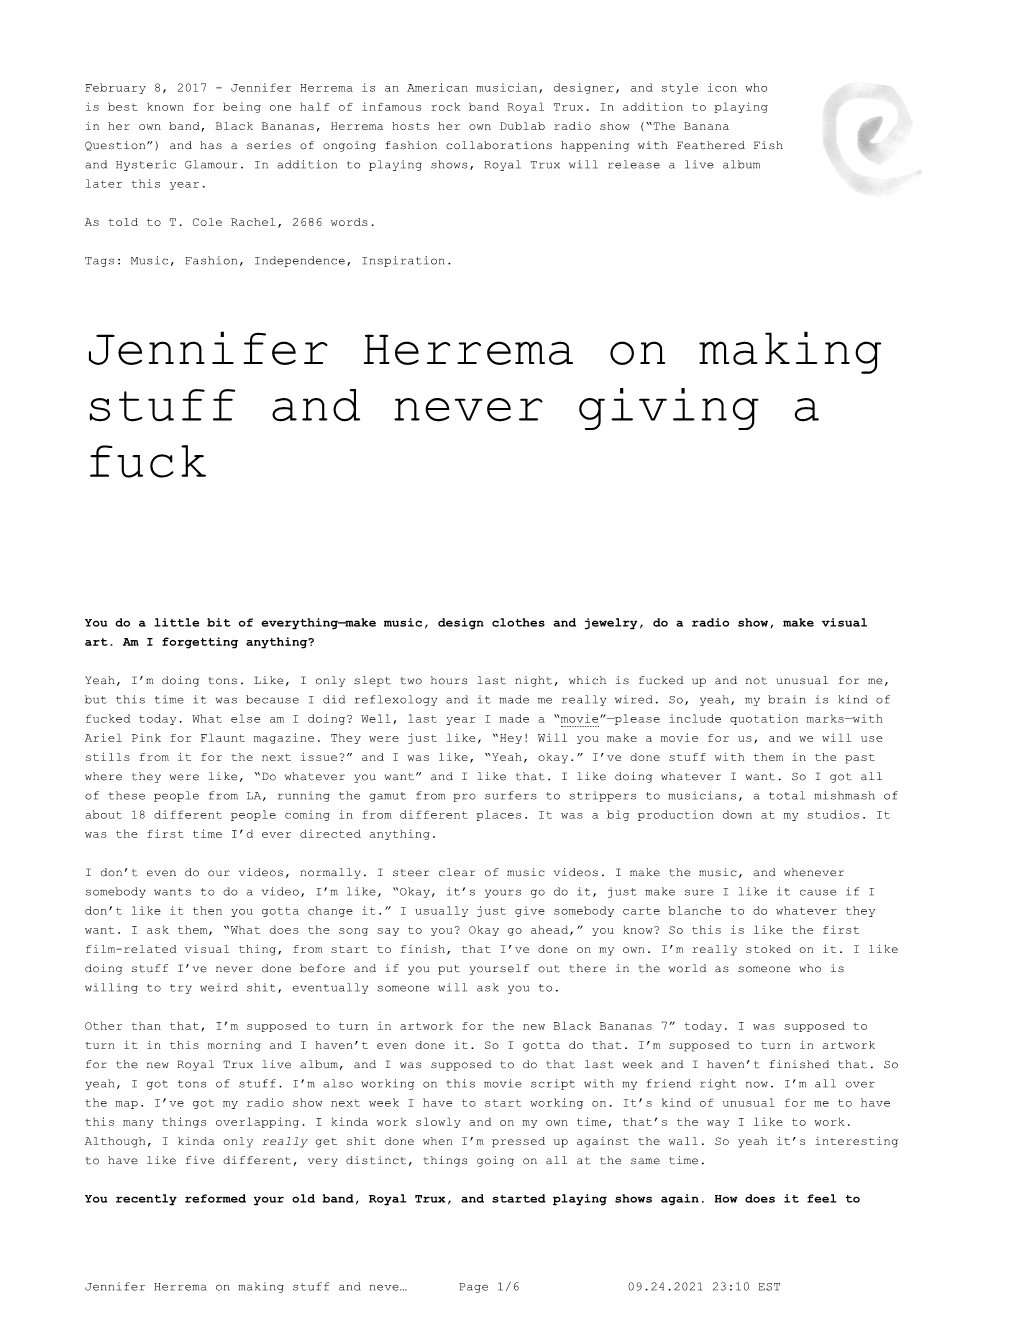 Jennifer Herrema on Making Stuff and Never Giving a Fuck